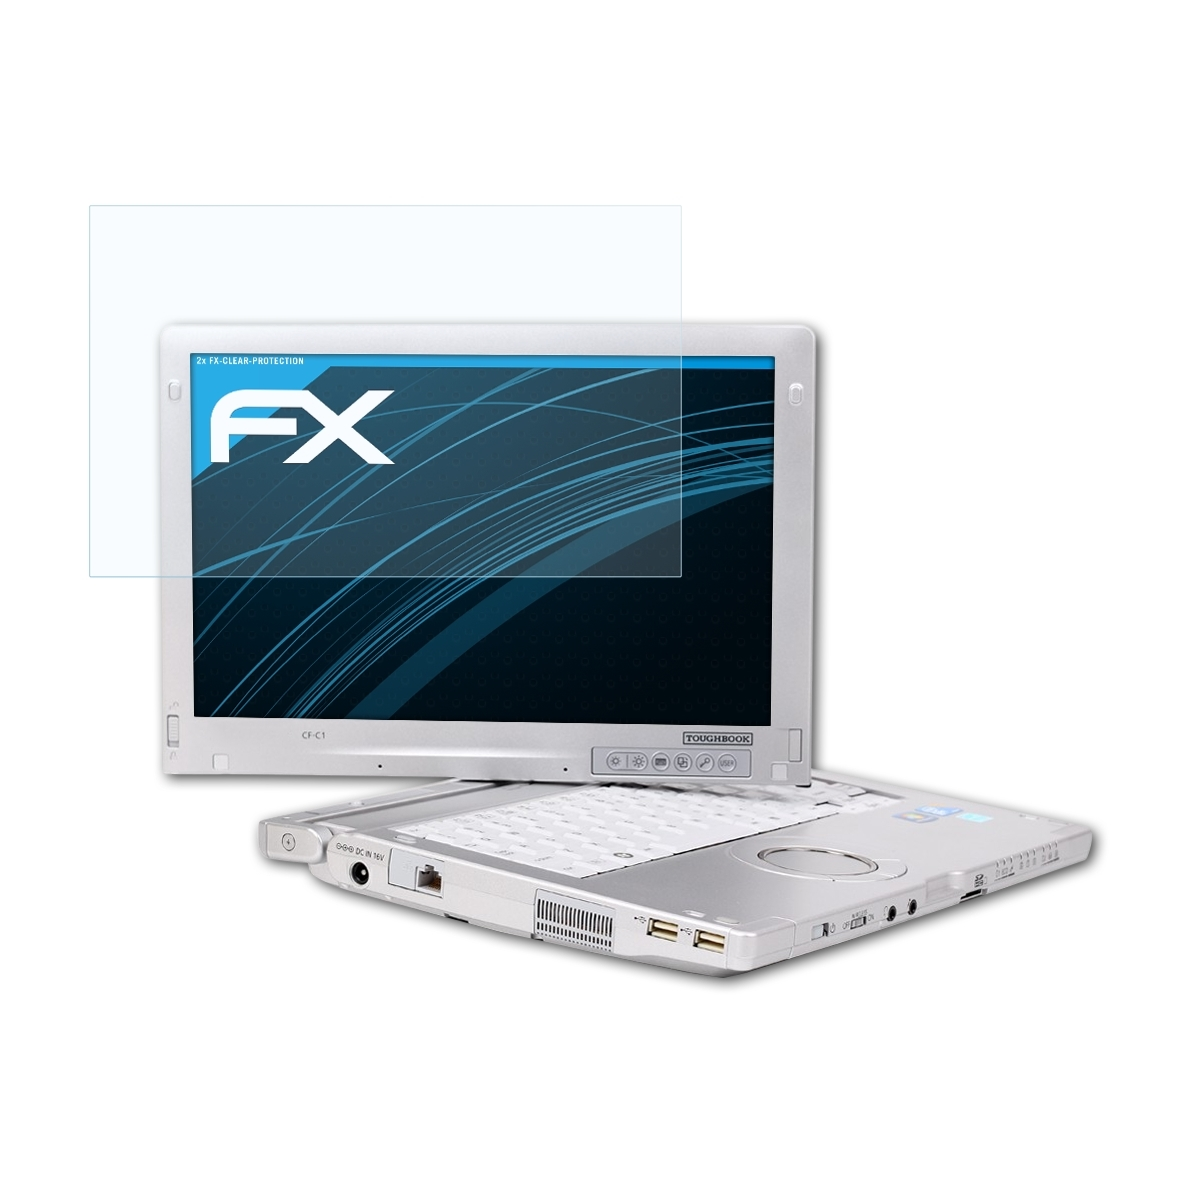 ATFOLIX 2x FX-Clear Displayschutz(für Panasonic CF-C1) ToughBook